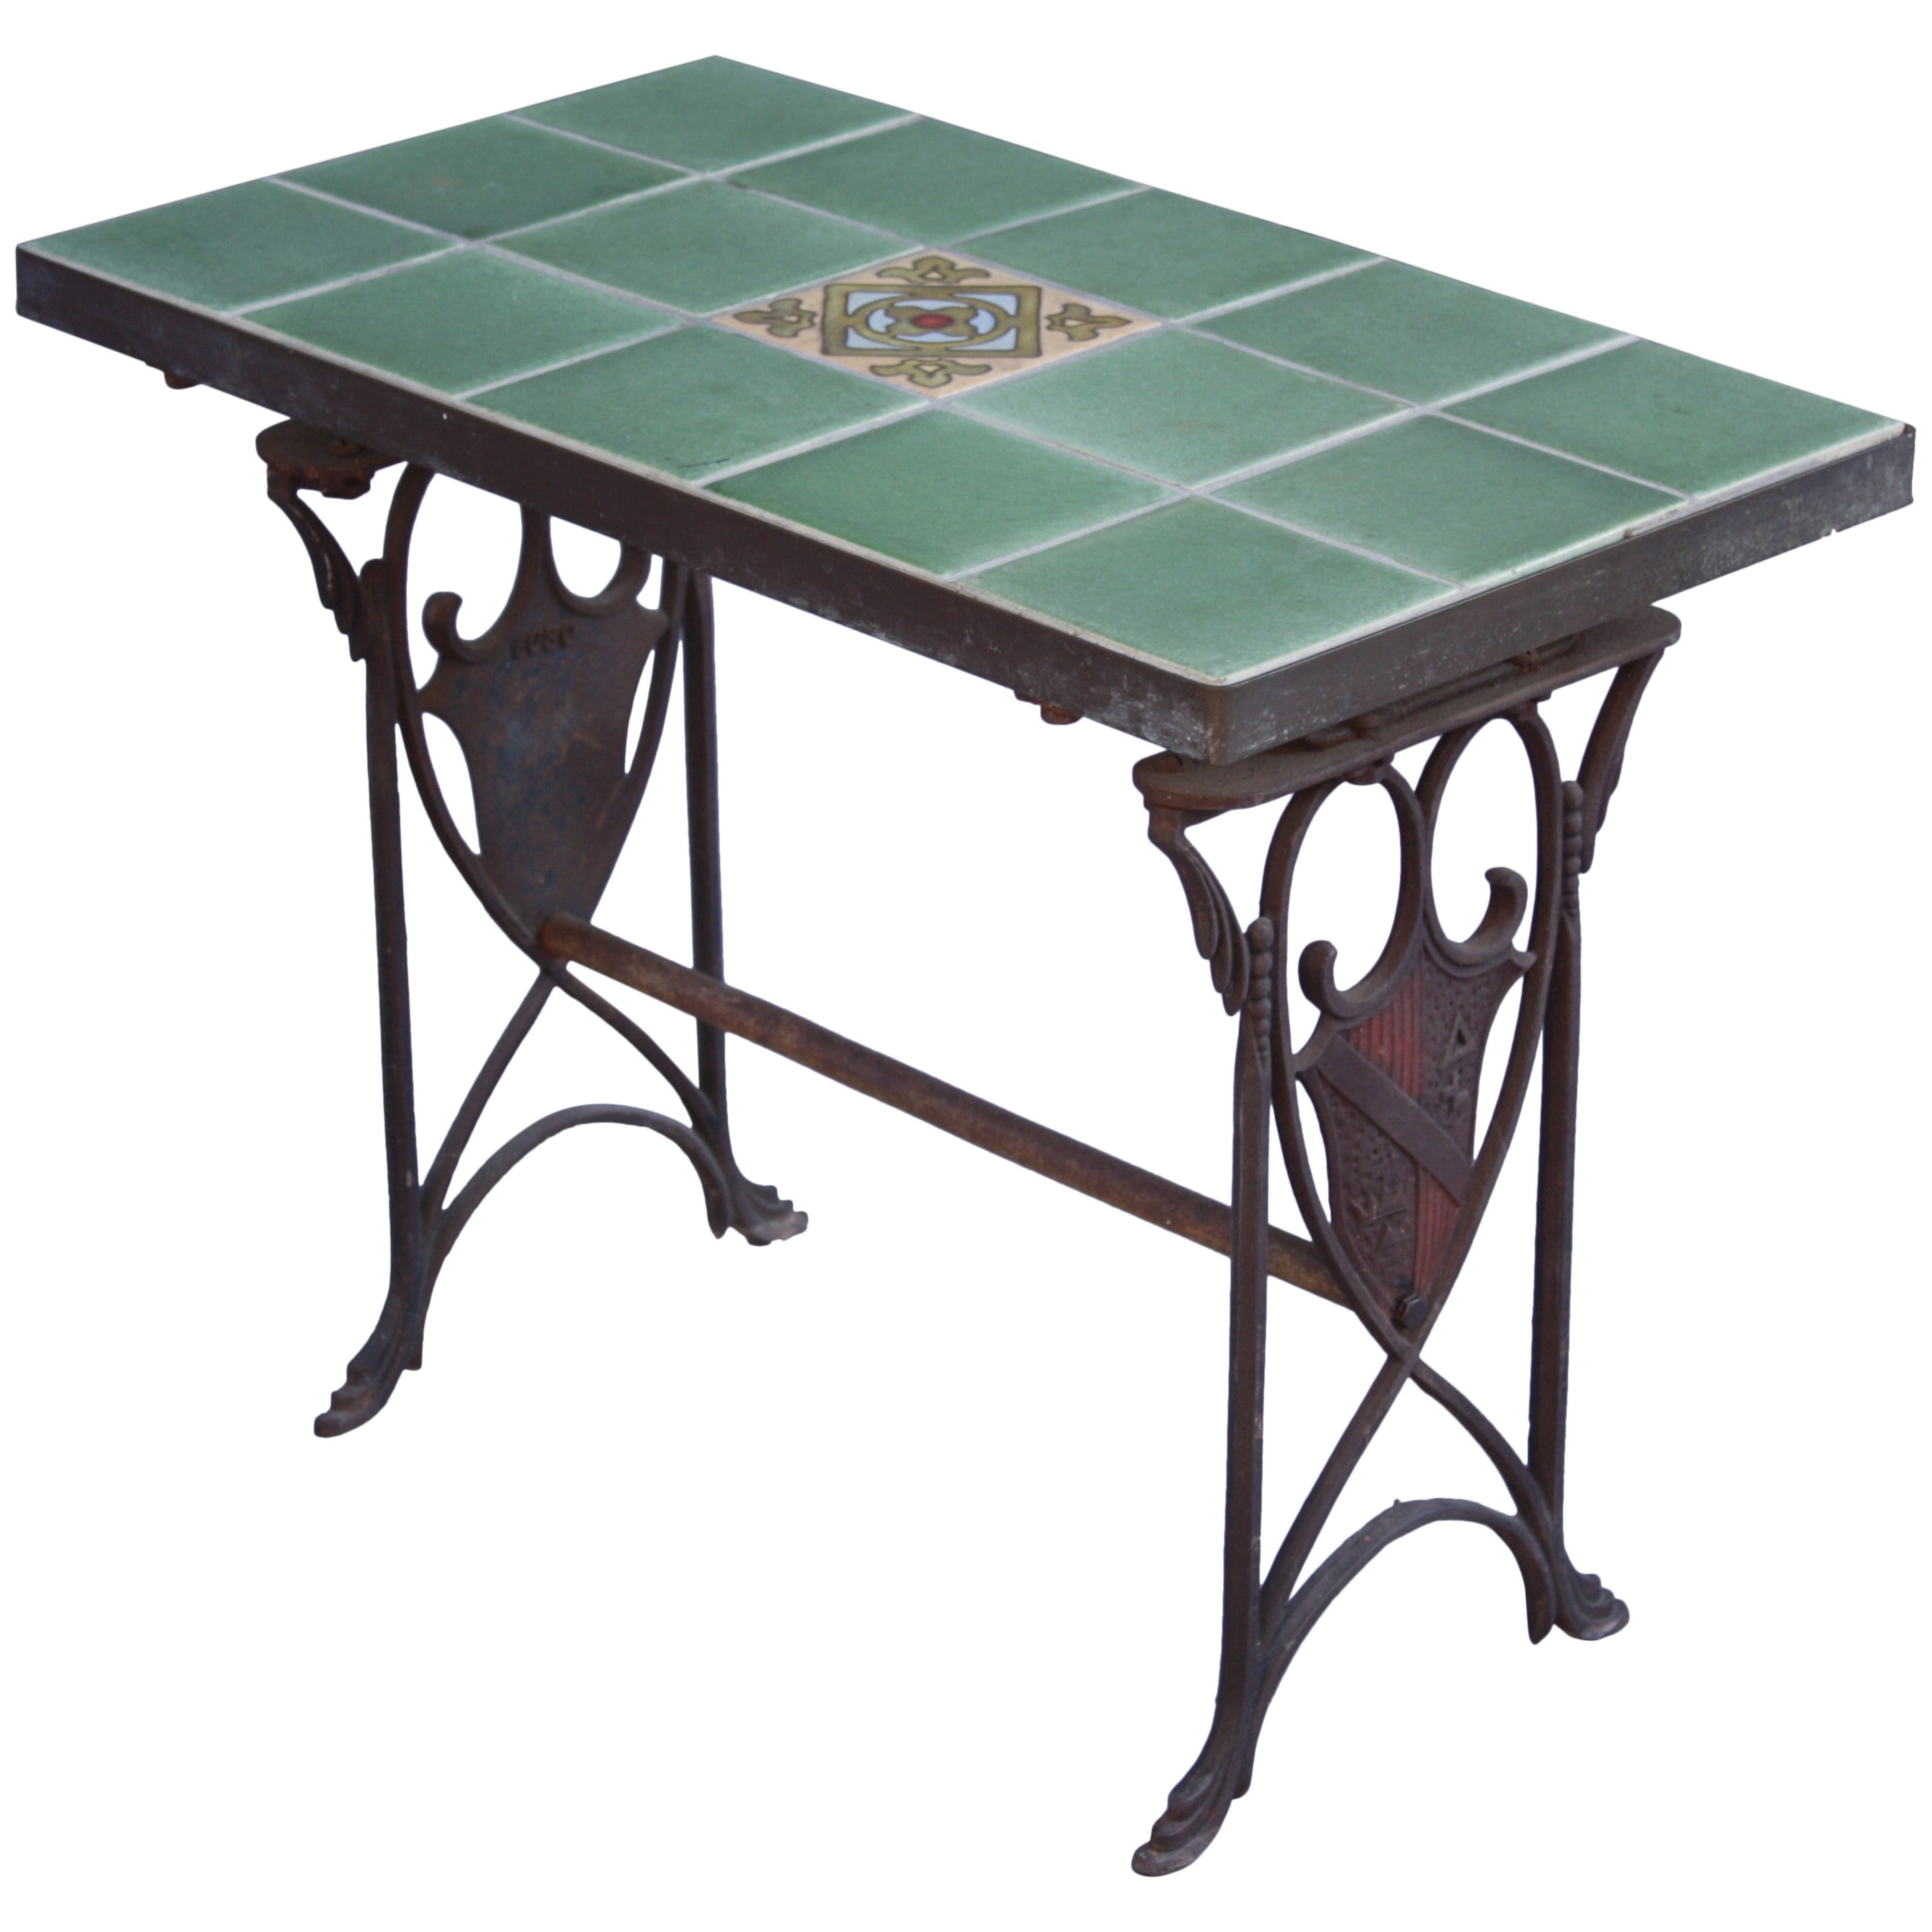 Antique Spanish Revival California Tile Table